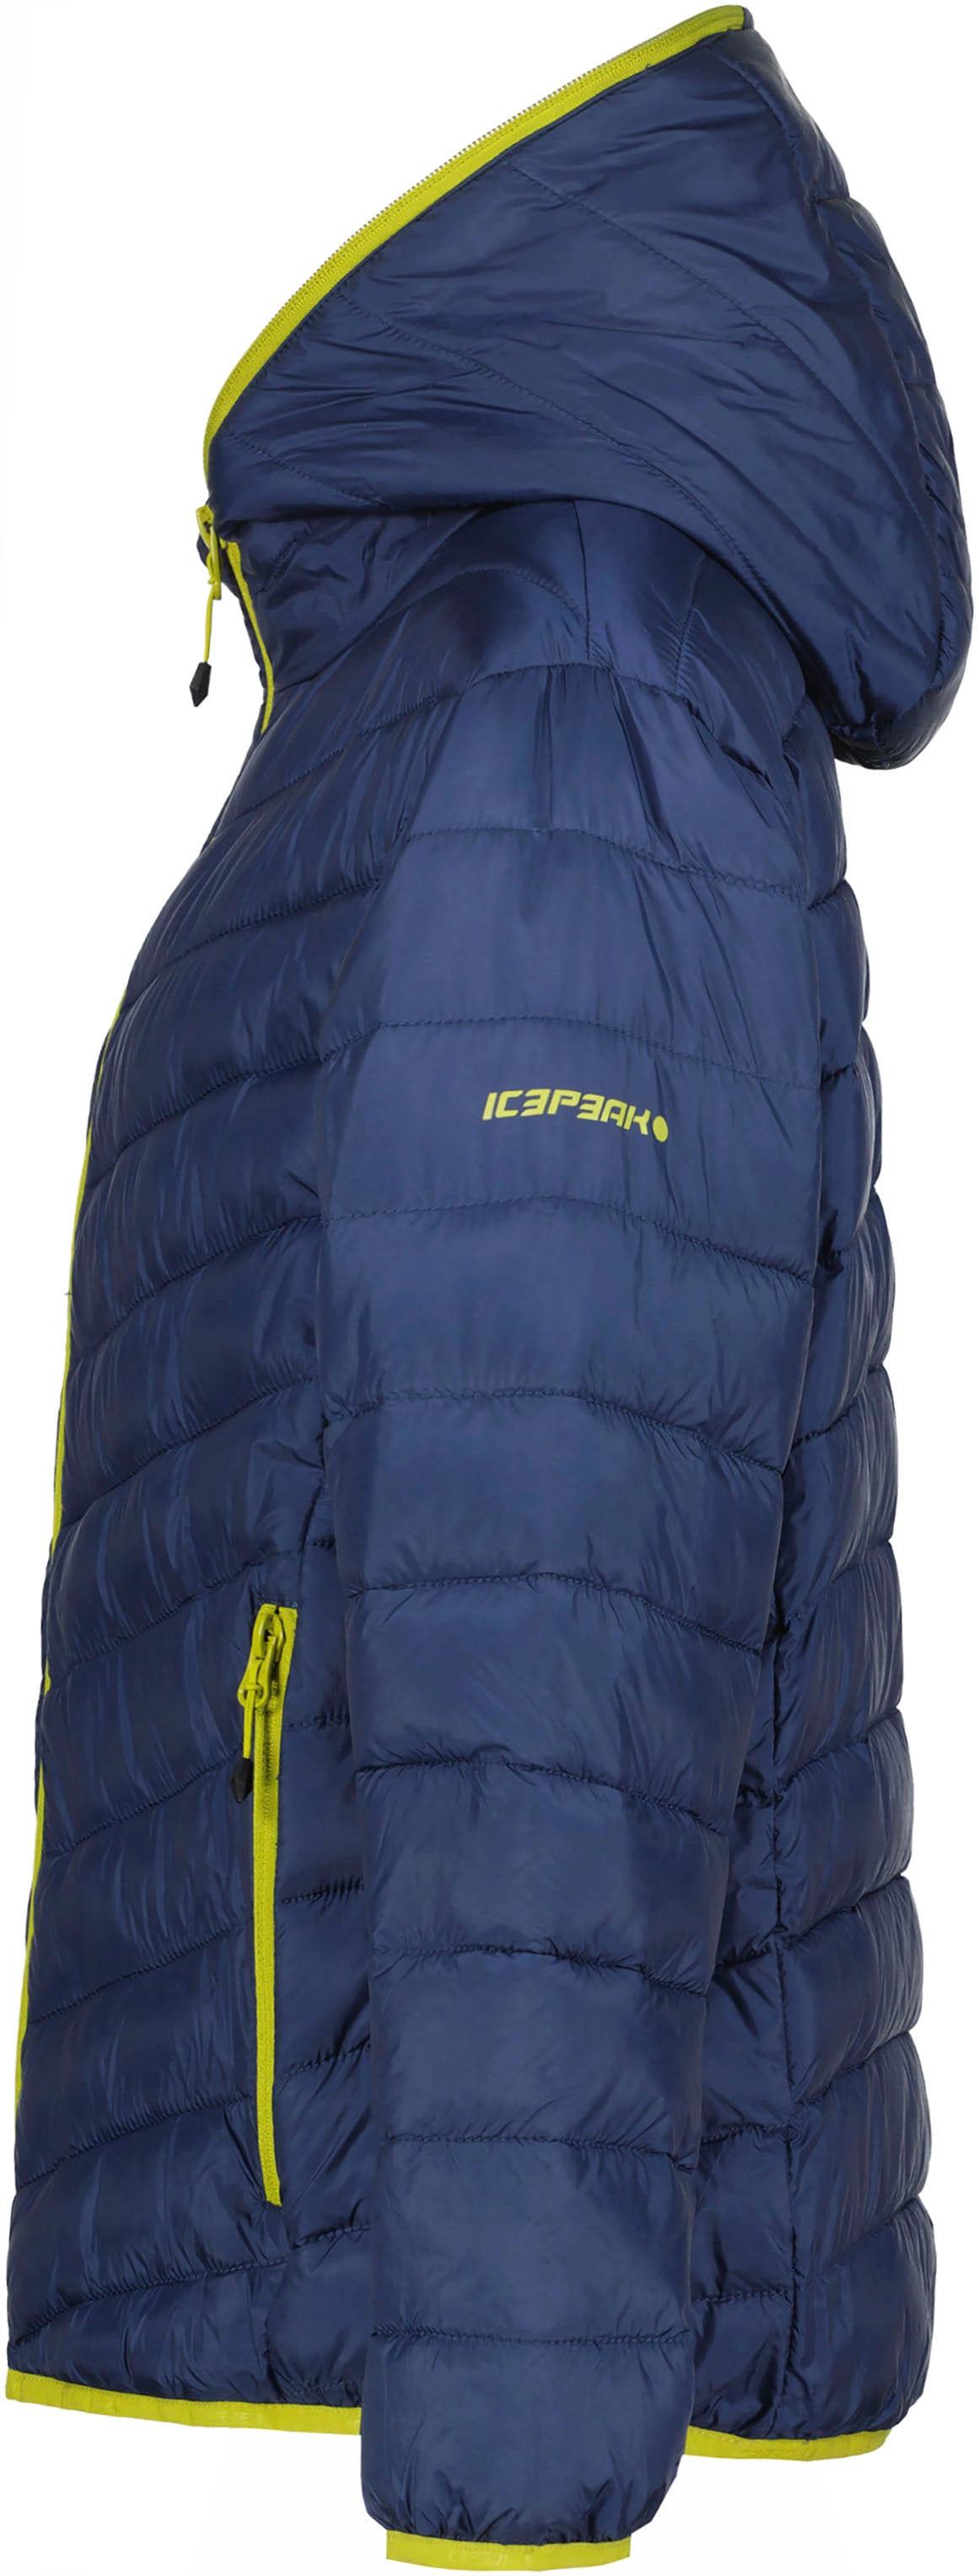 Icepeak Funktionsjacke »PENIG JR - für Kinder«, mit Kapuze, mit kontrastfarbenem Logoschriftzug am Oberarm